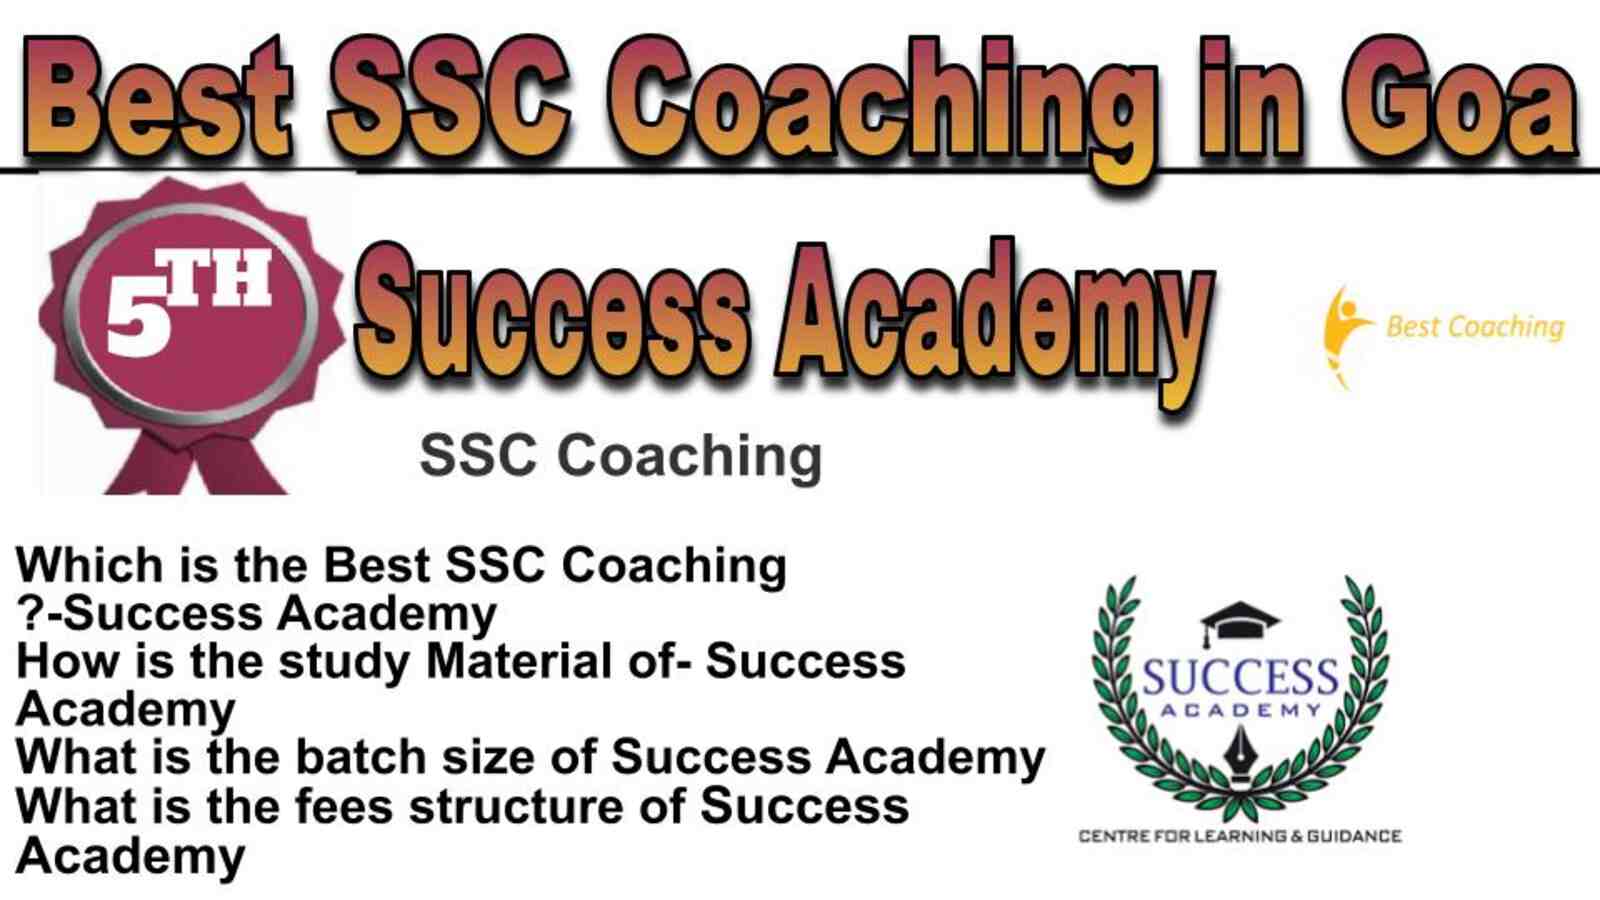 Rank 5 best SSC coaching in Goa